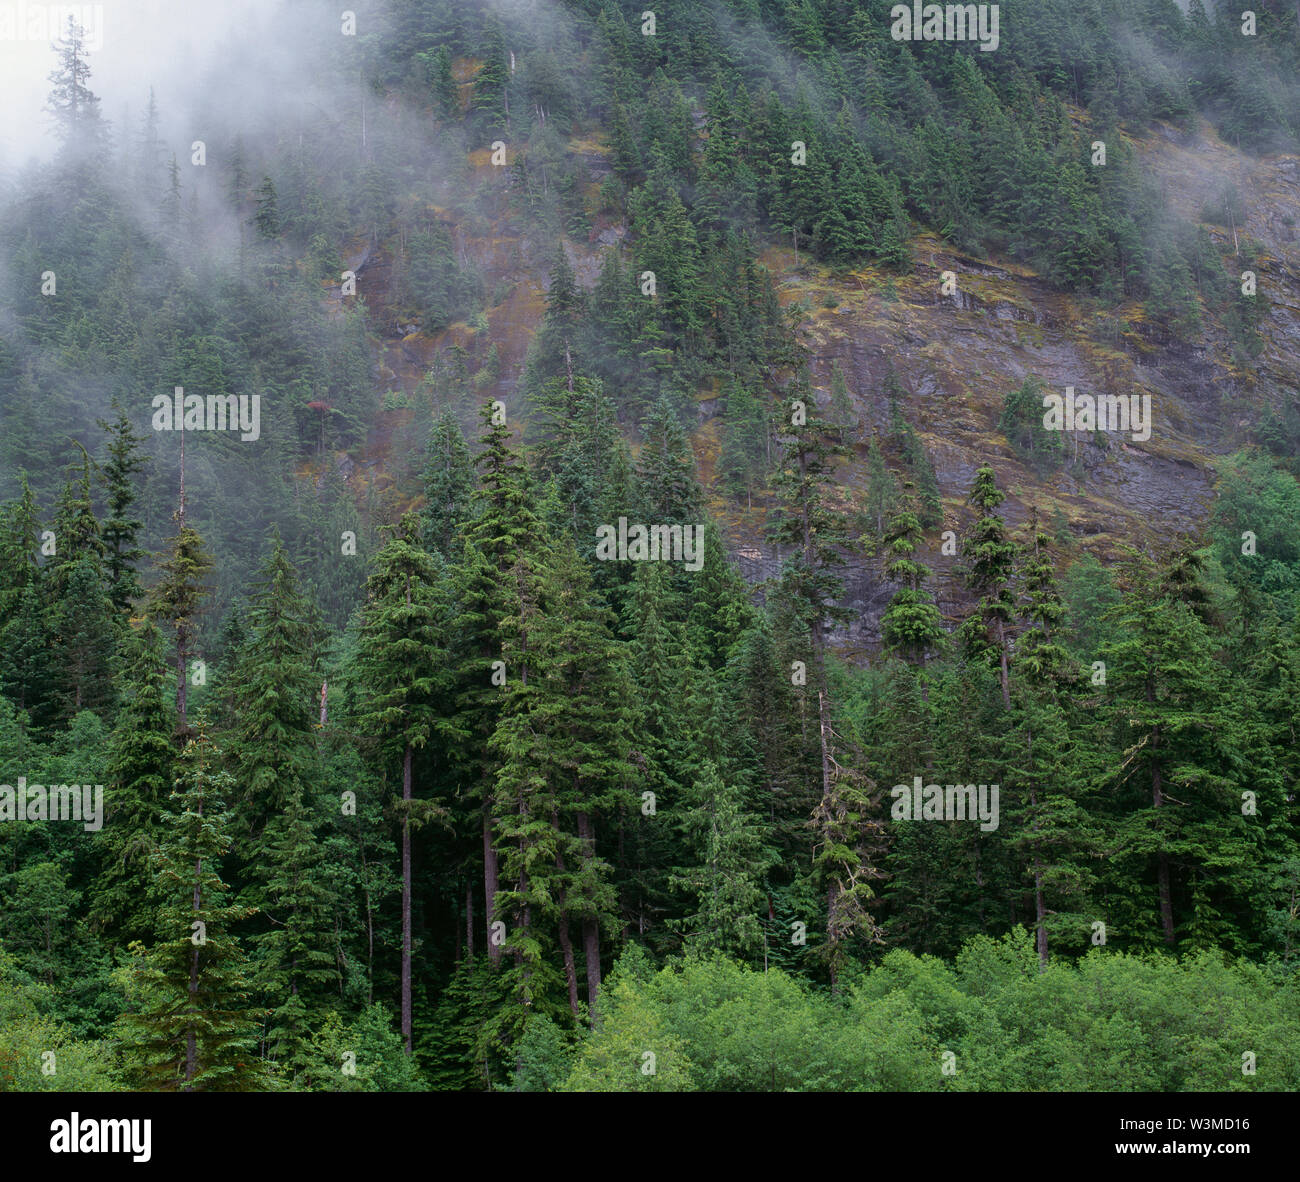 USA, Washington, Mt. Rainier National Park, Clouds swirl among evergreen trees on steep sides of Eagle Peak. Stock Photo